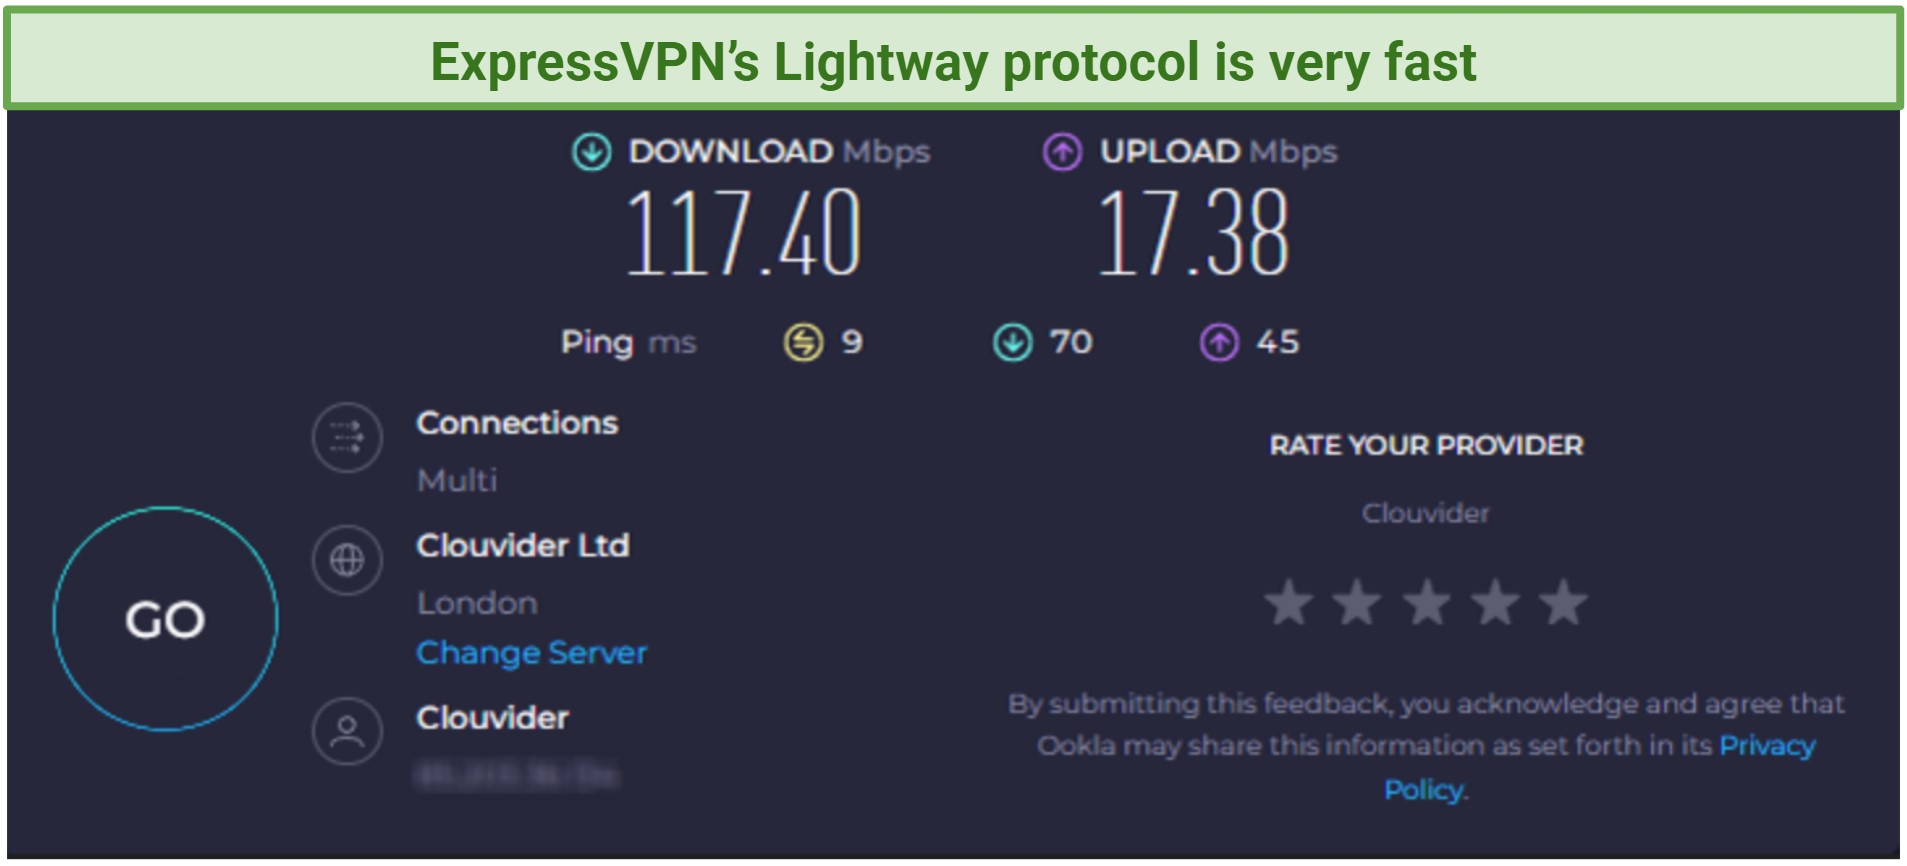 ExpressVPN's speed test results using a UK server